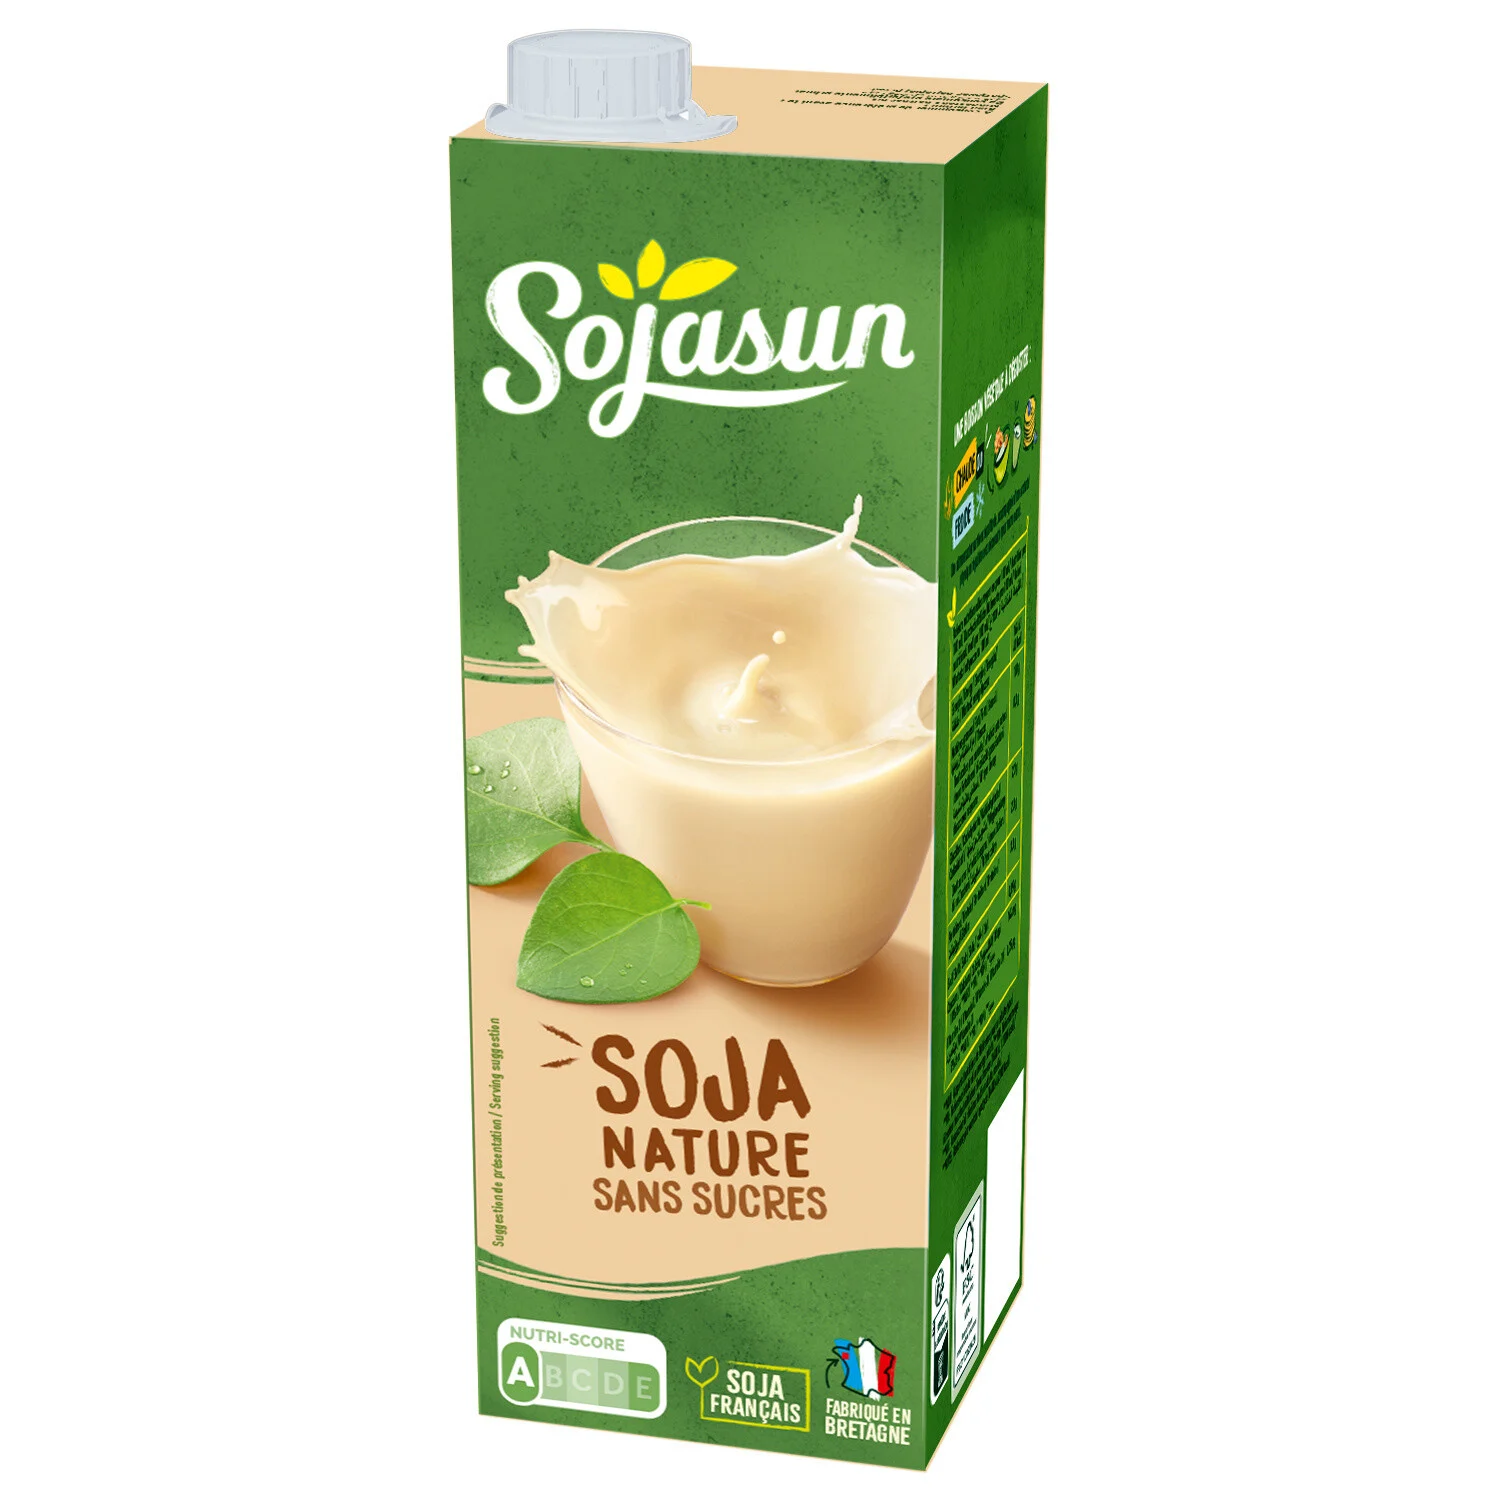 Sojasun Plain soy milk 1L